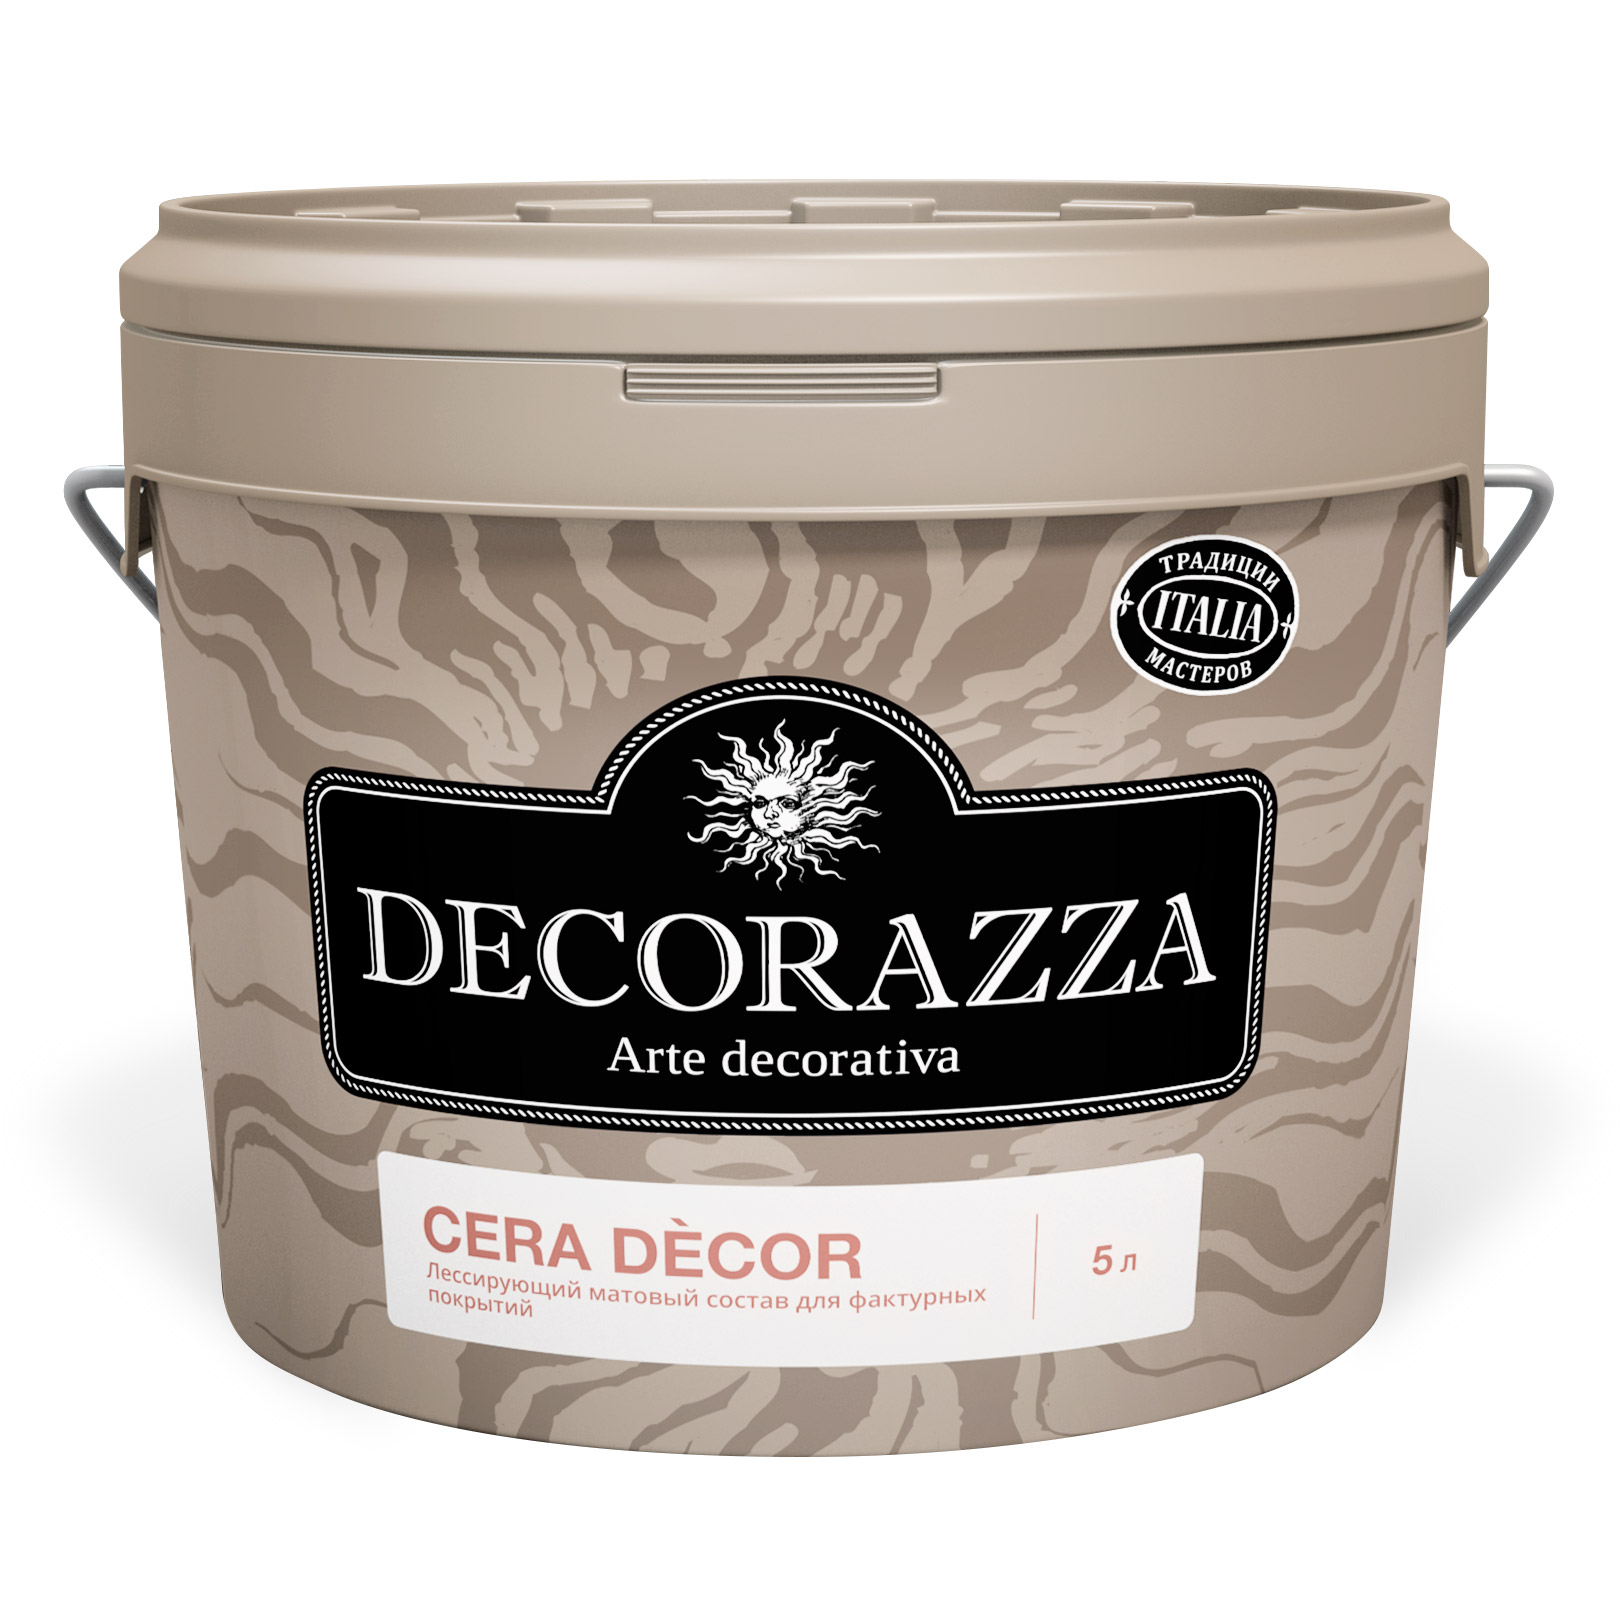 Воск для штукатурок Cera Decor Decorazza 2,5 кг воск лессирующий decorazza cera di veneziano nova 1 л